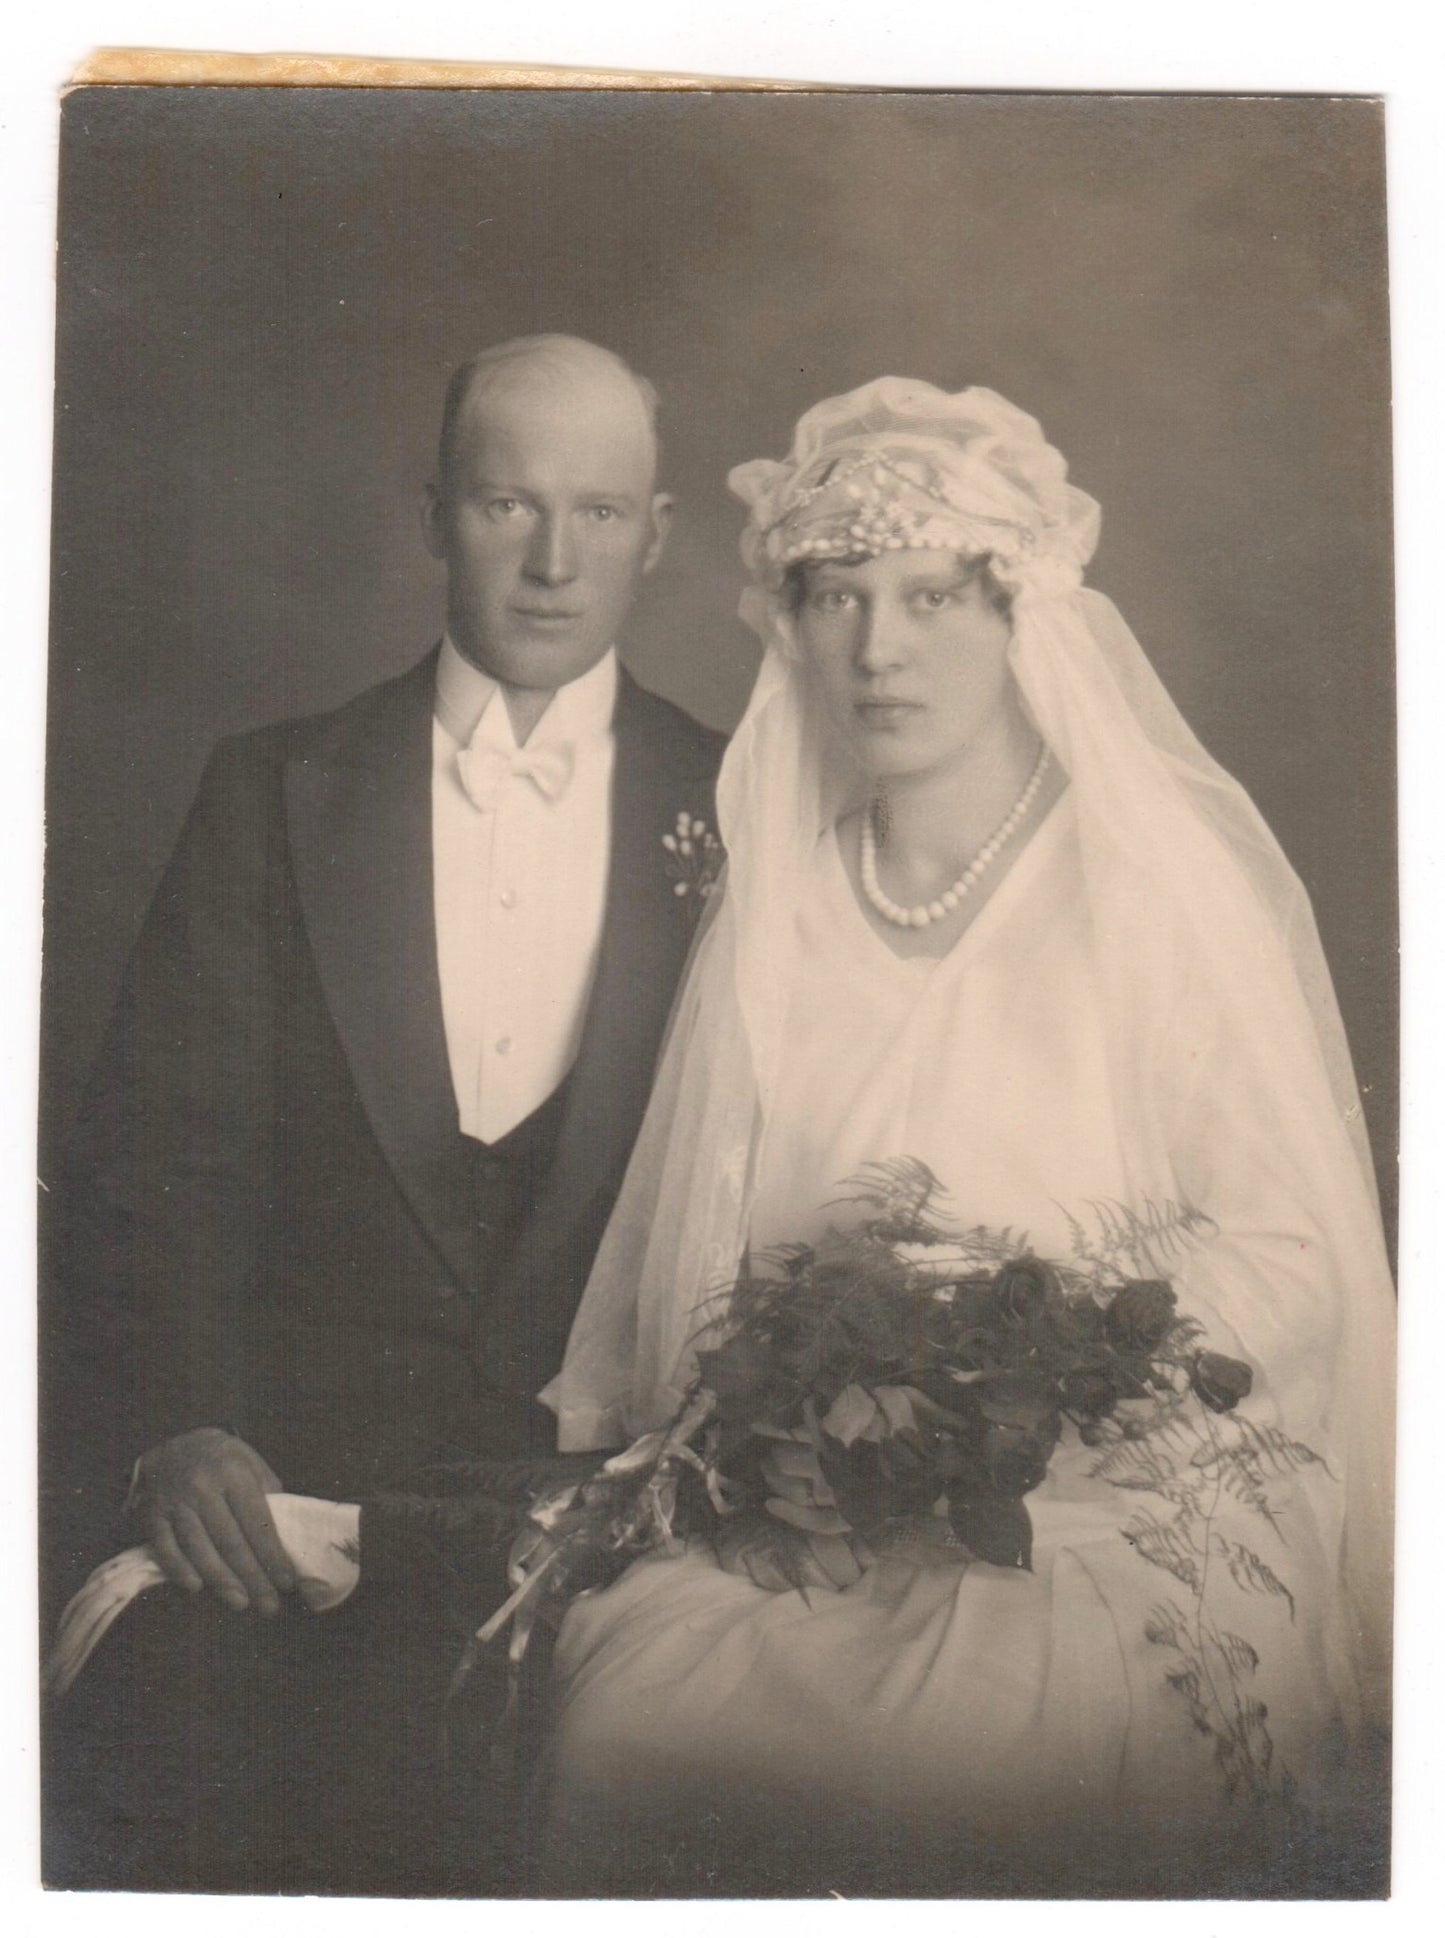 Beautiful Postcard - Portrait of the Newlyweds - Wedding Photography - Fashion